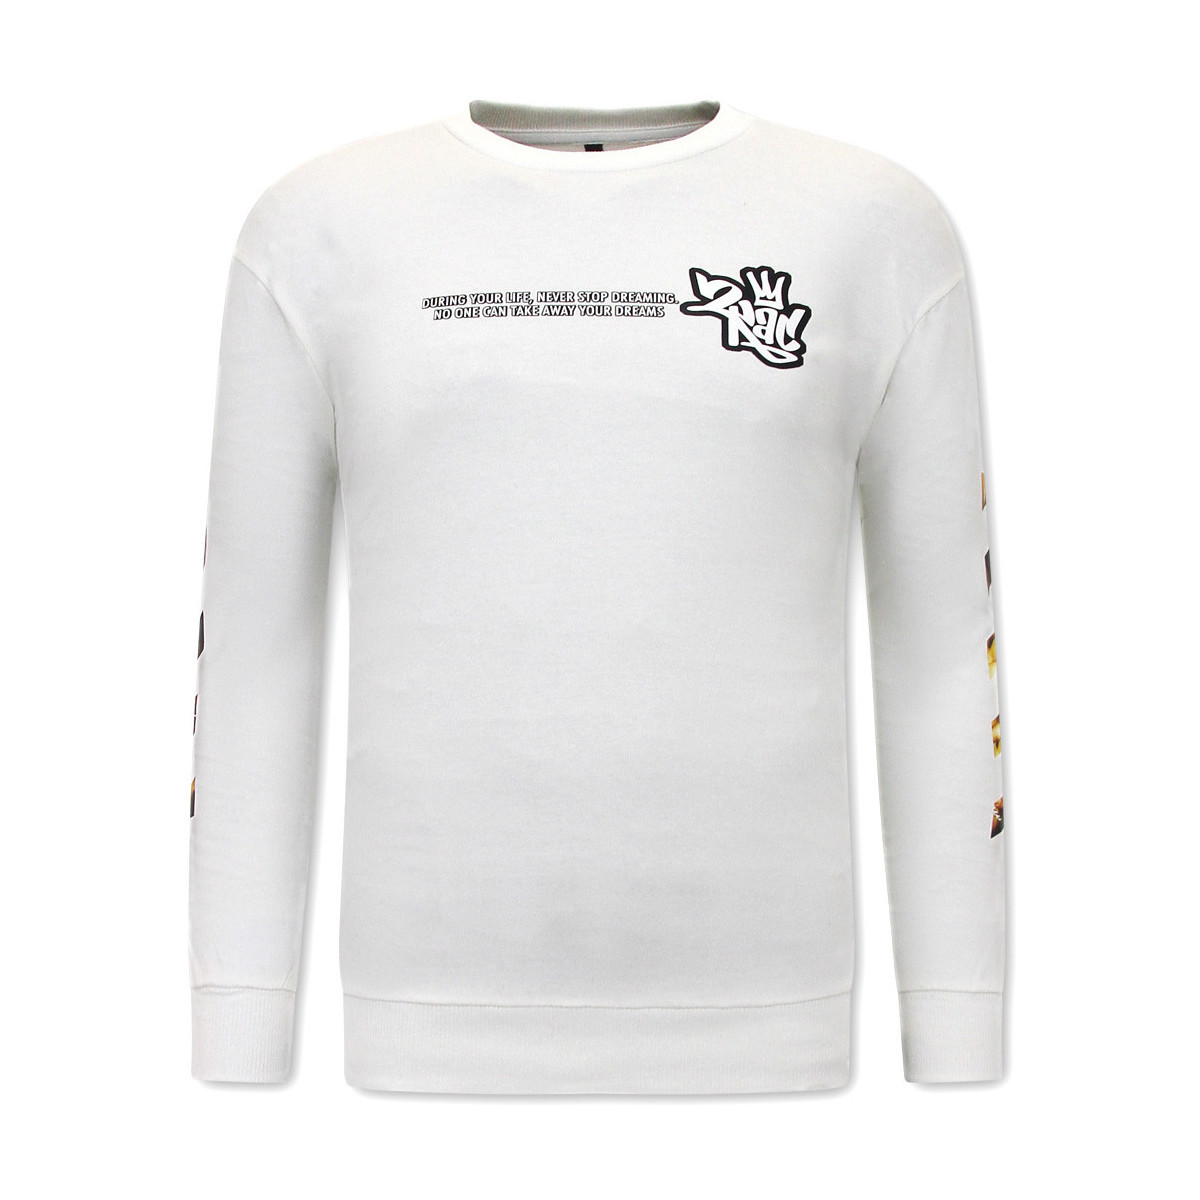 Textiel Heren Sweaters / Sweatshirts Ikao Tupac Shakur Pac Wit